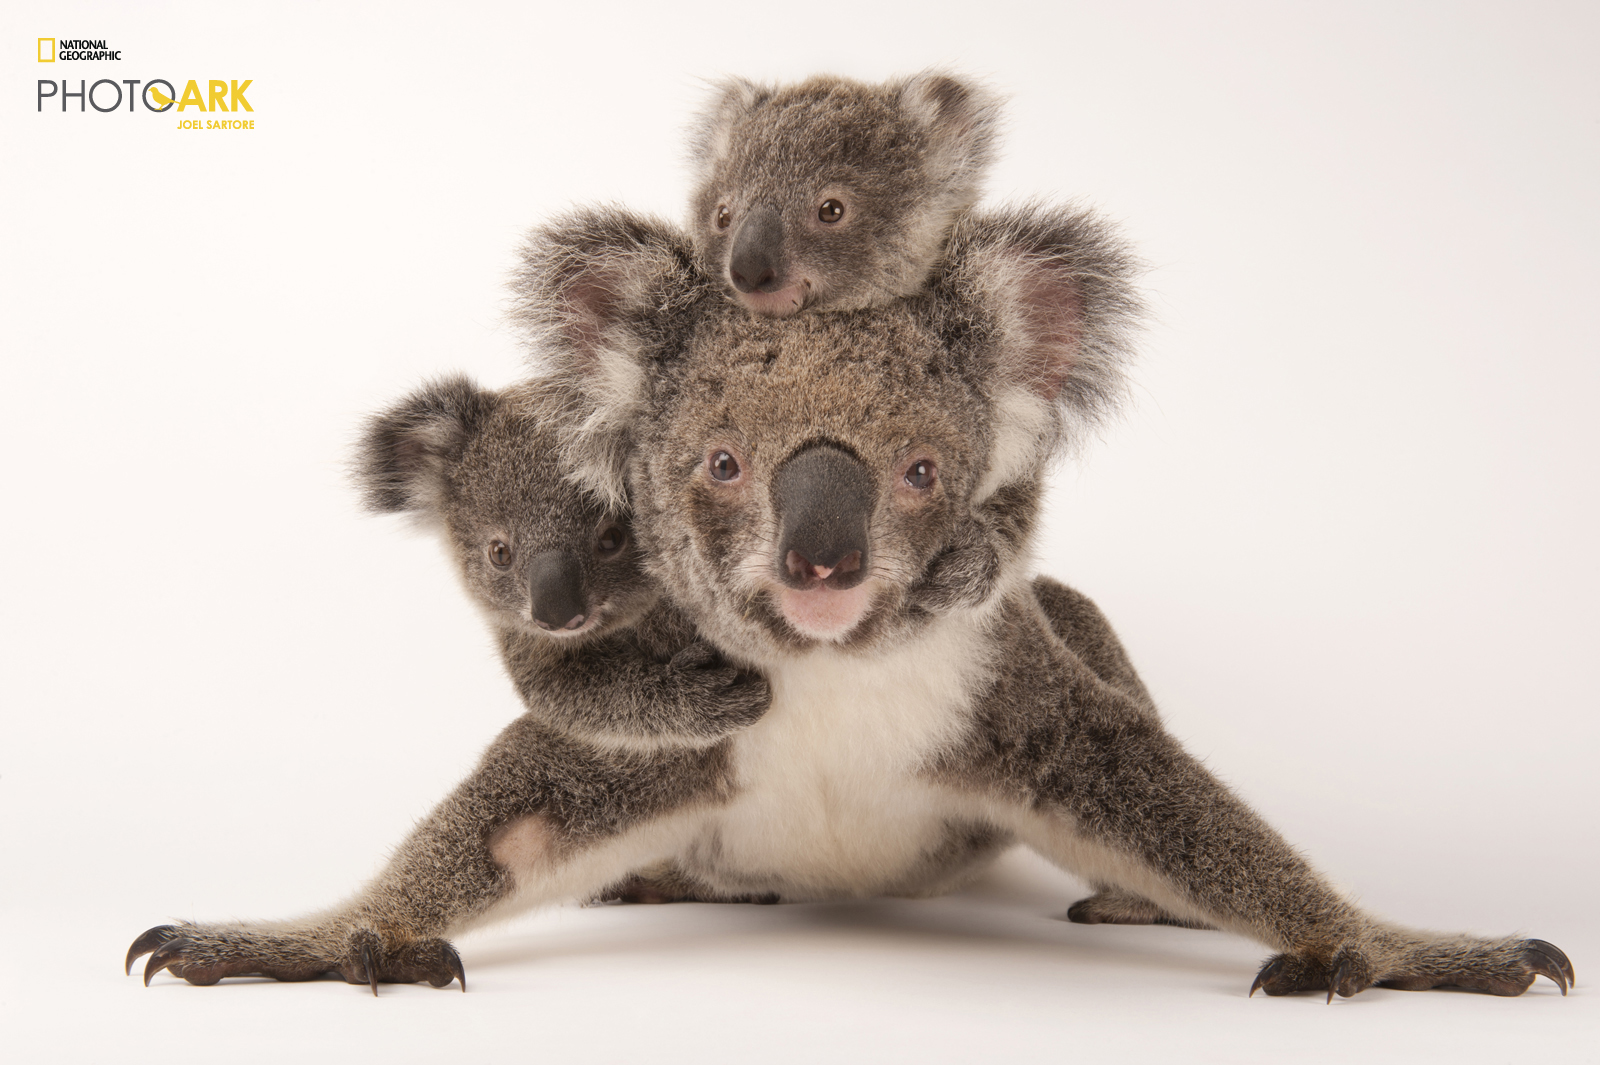 Portrait of Koala with two juvenile koalas climbing on parent from Joel Sartore's Photo Ark project